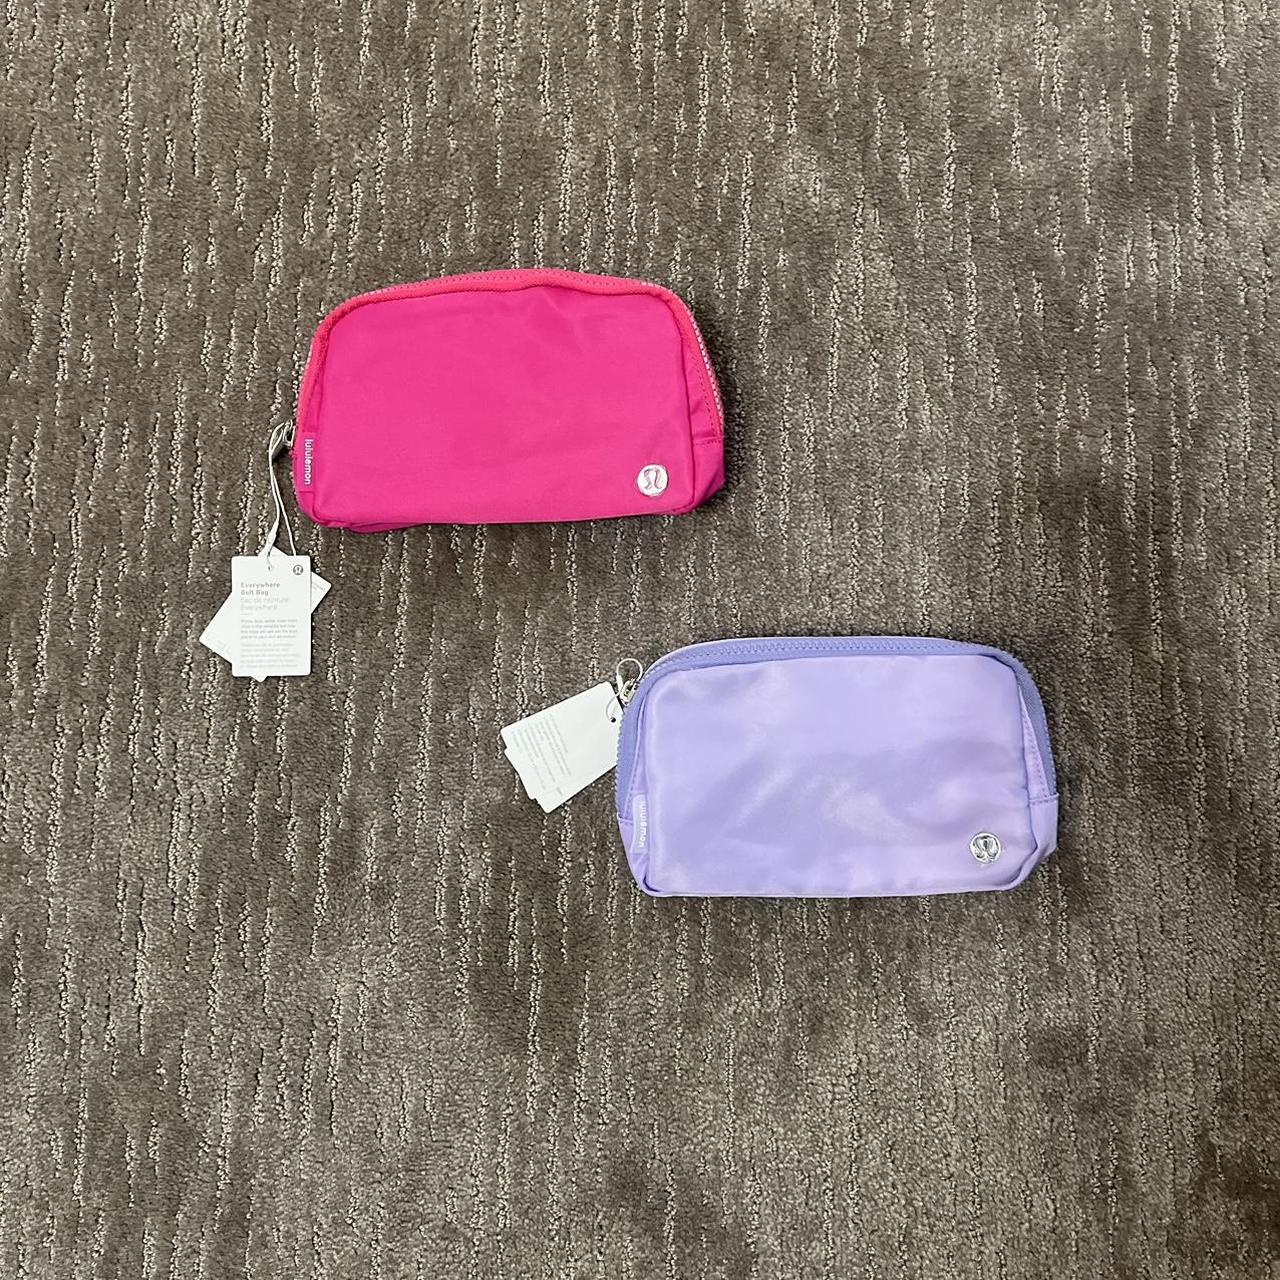 Purple and pink everyday belt bag bundle Comes with... - Depop